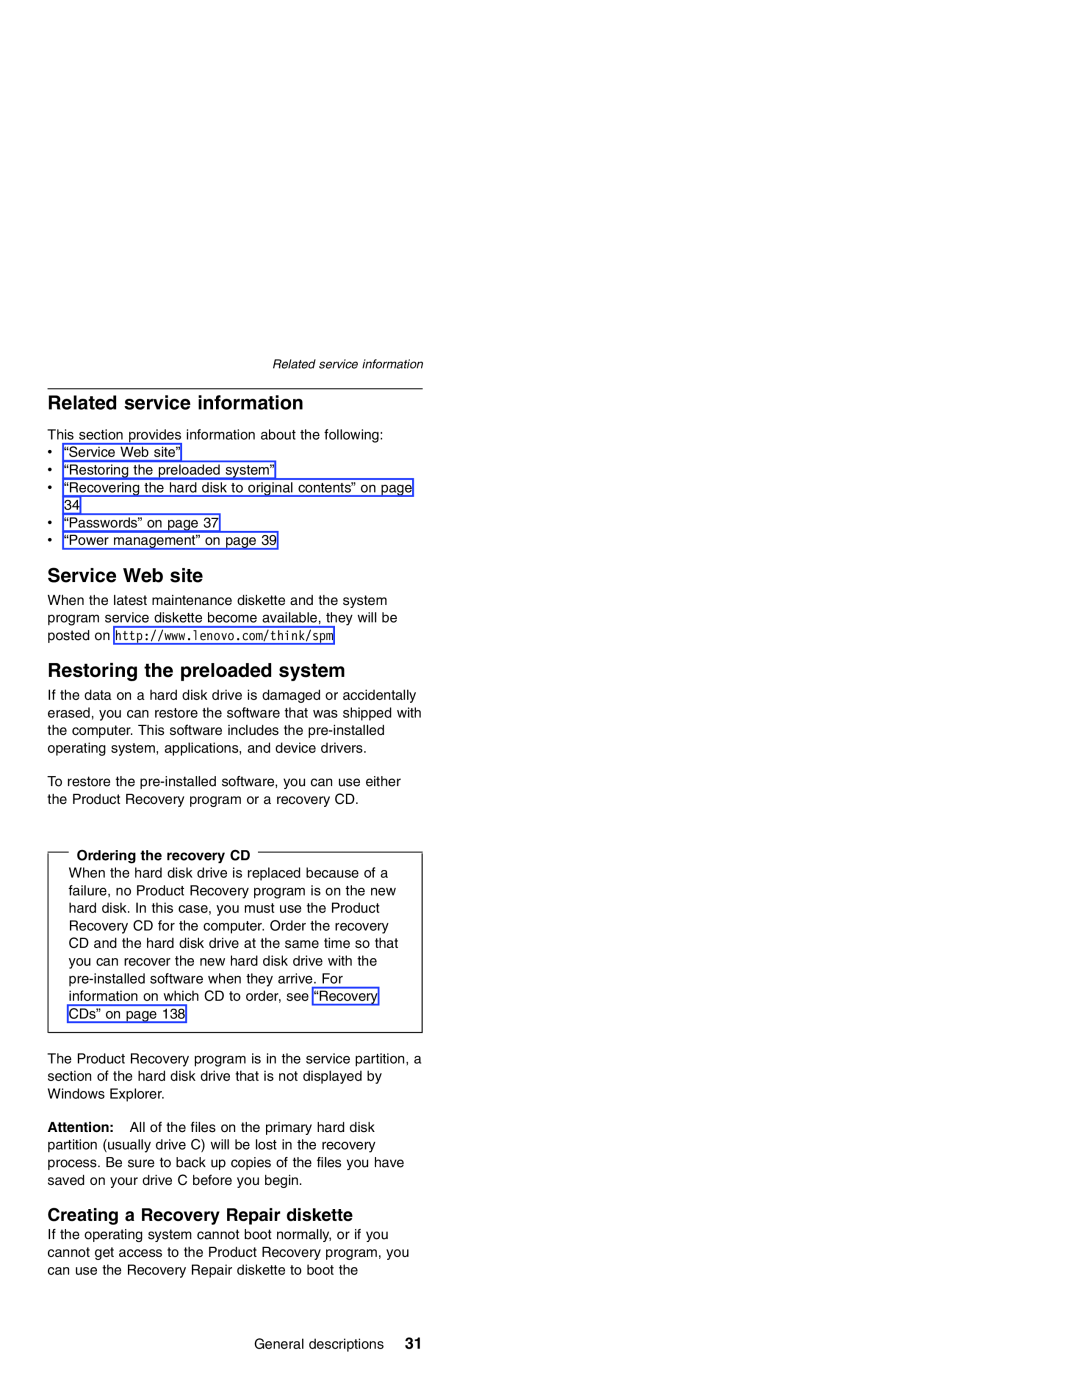 Lenovo MT 2369 manual Related service information, Service Web site, Restoring the preloaded system 